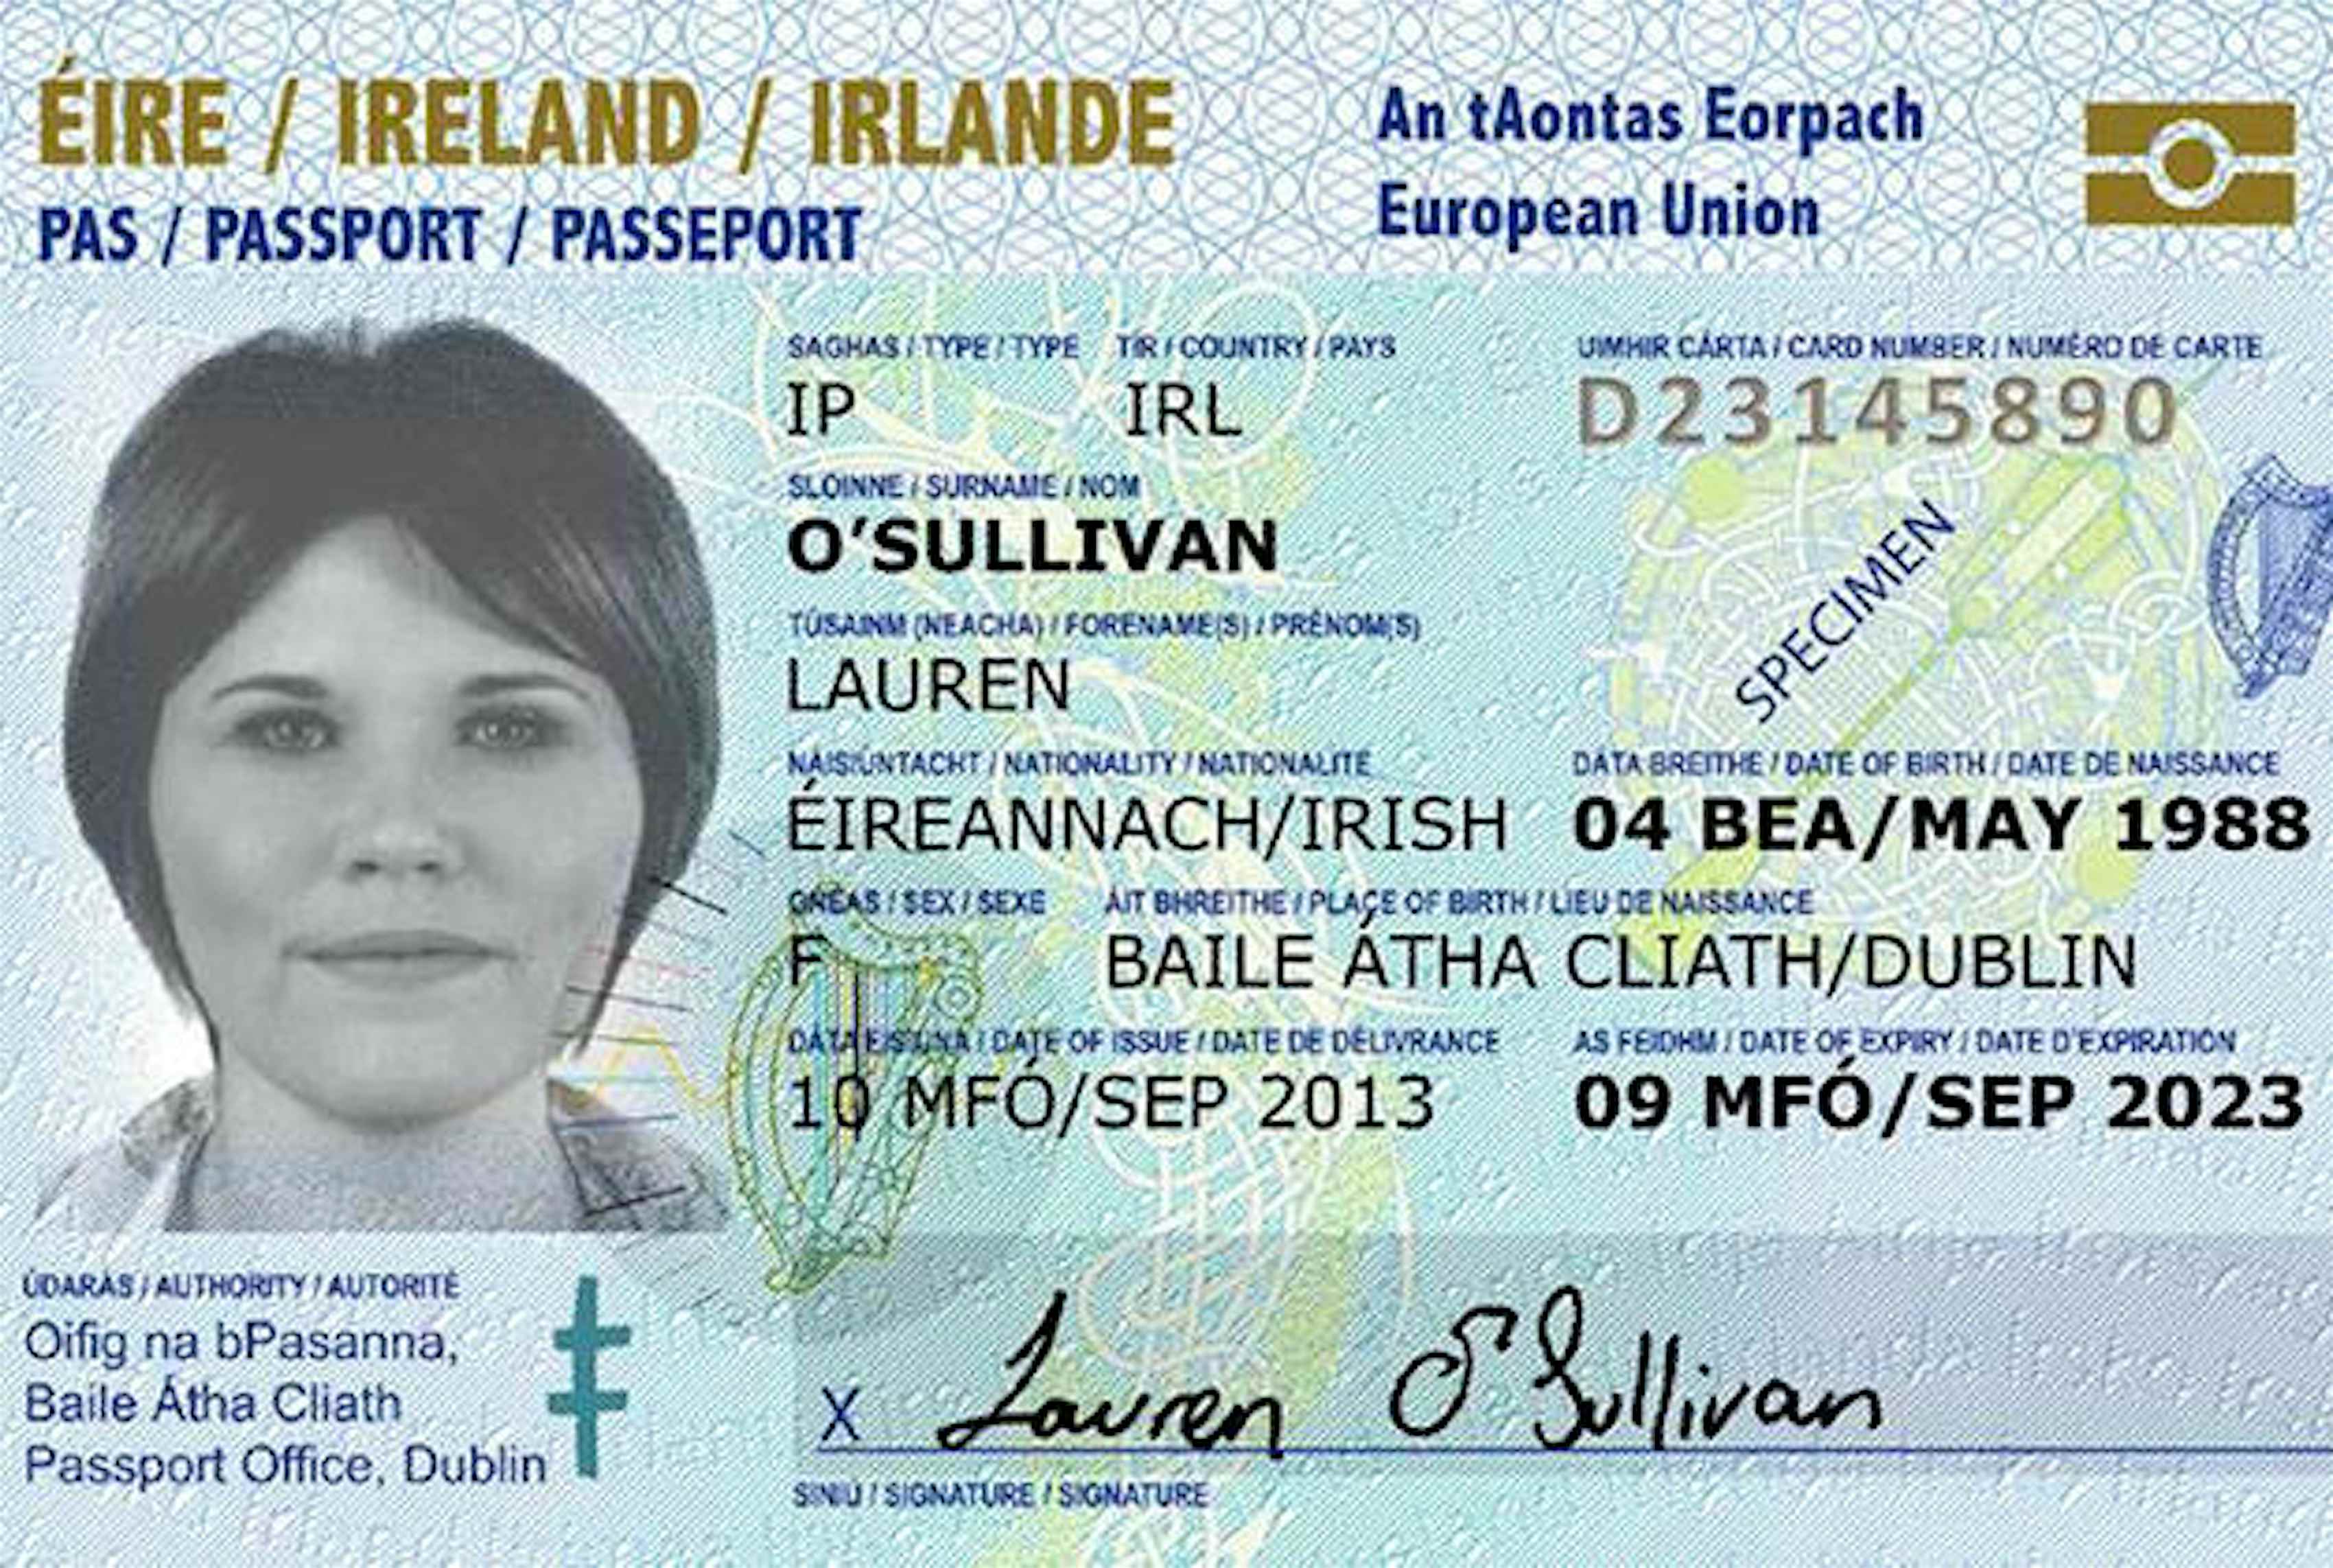 voyage en irlande passeport